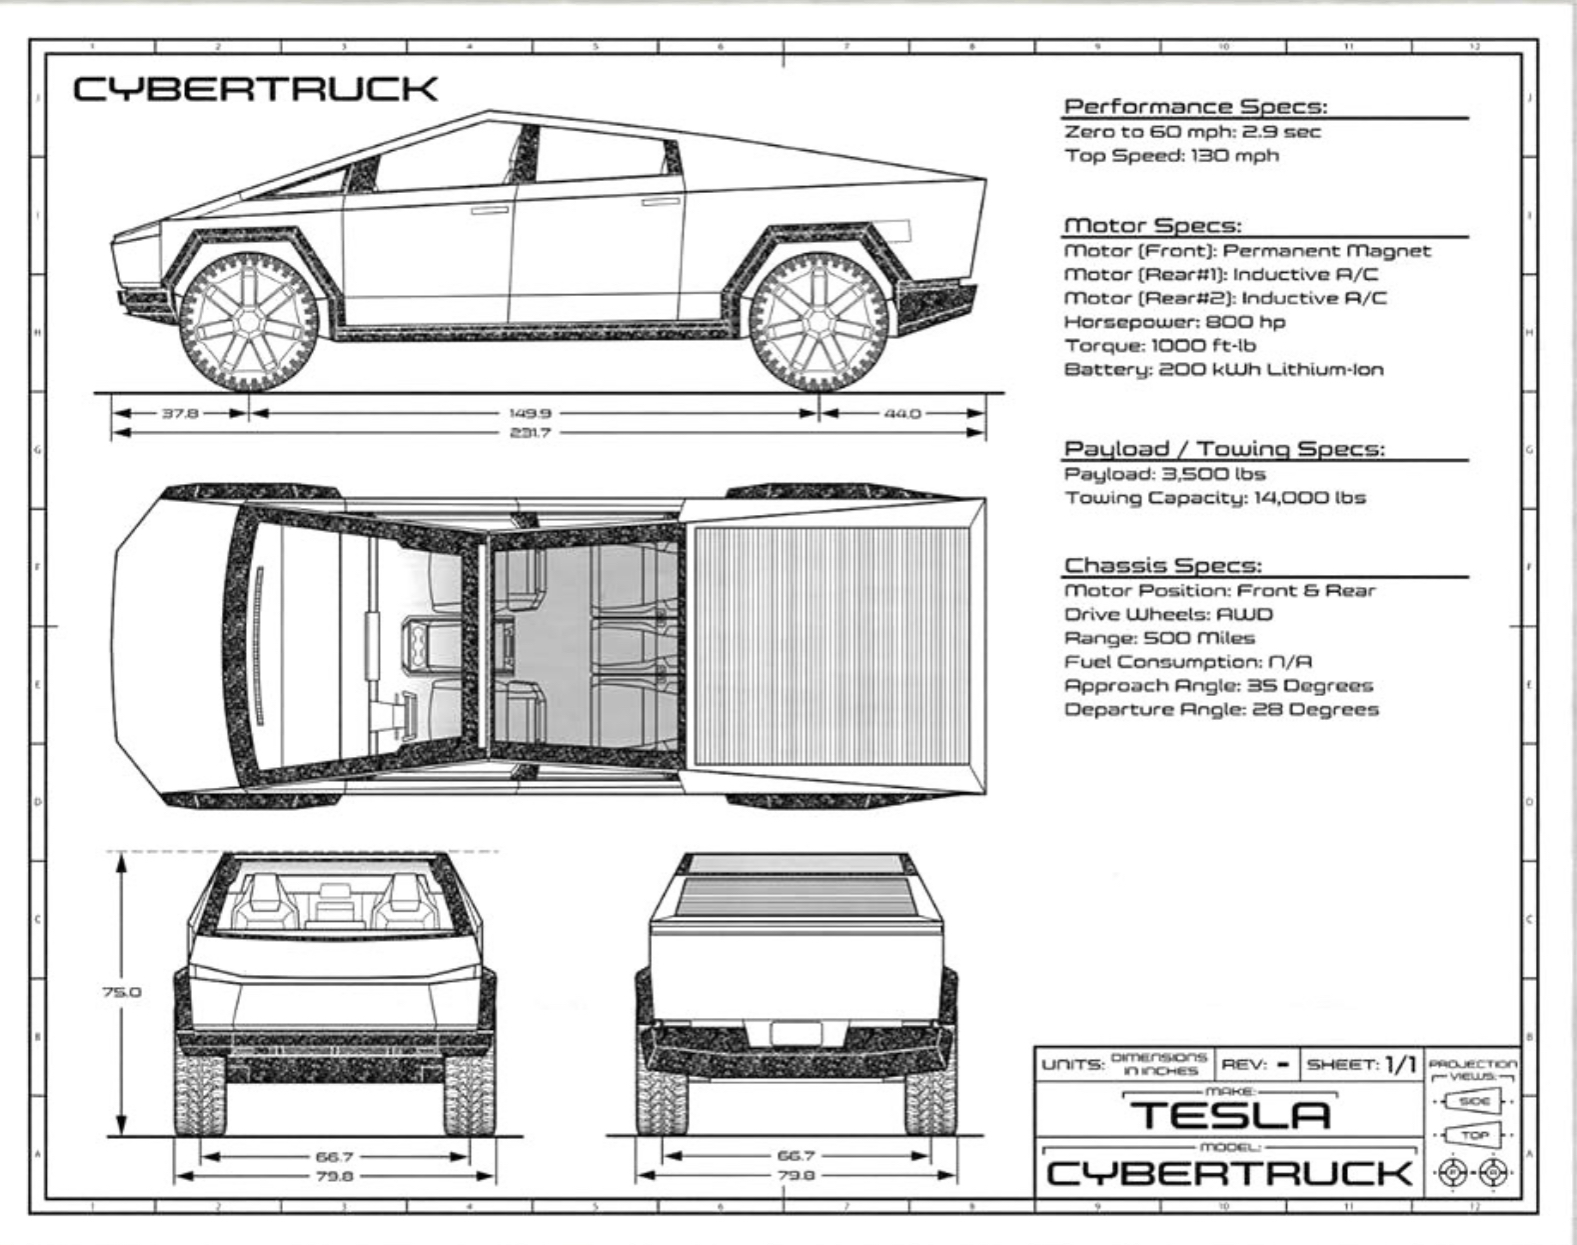 Tesla Cybertruck Cybertruck Solar Roof + Cover Potential [Photoshop] 00930268-69A1-4345-BFC2-F1FA4D4C72FA